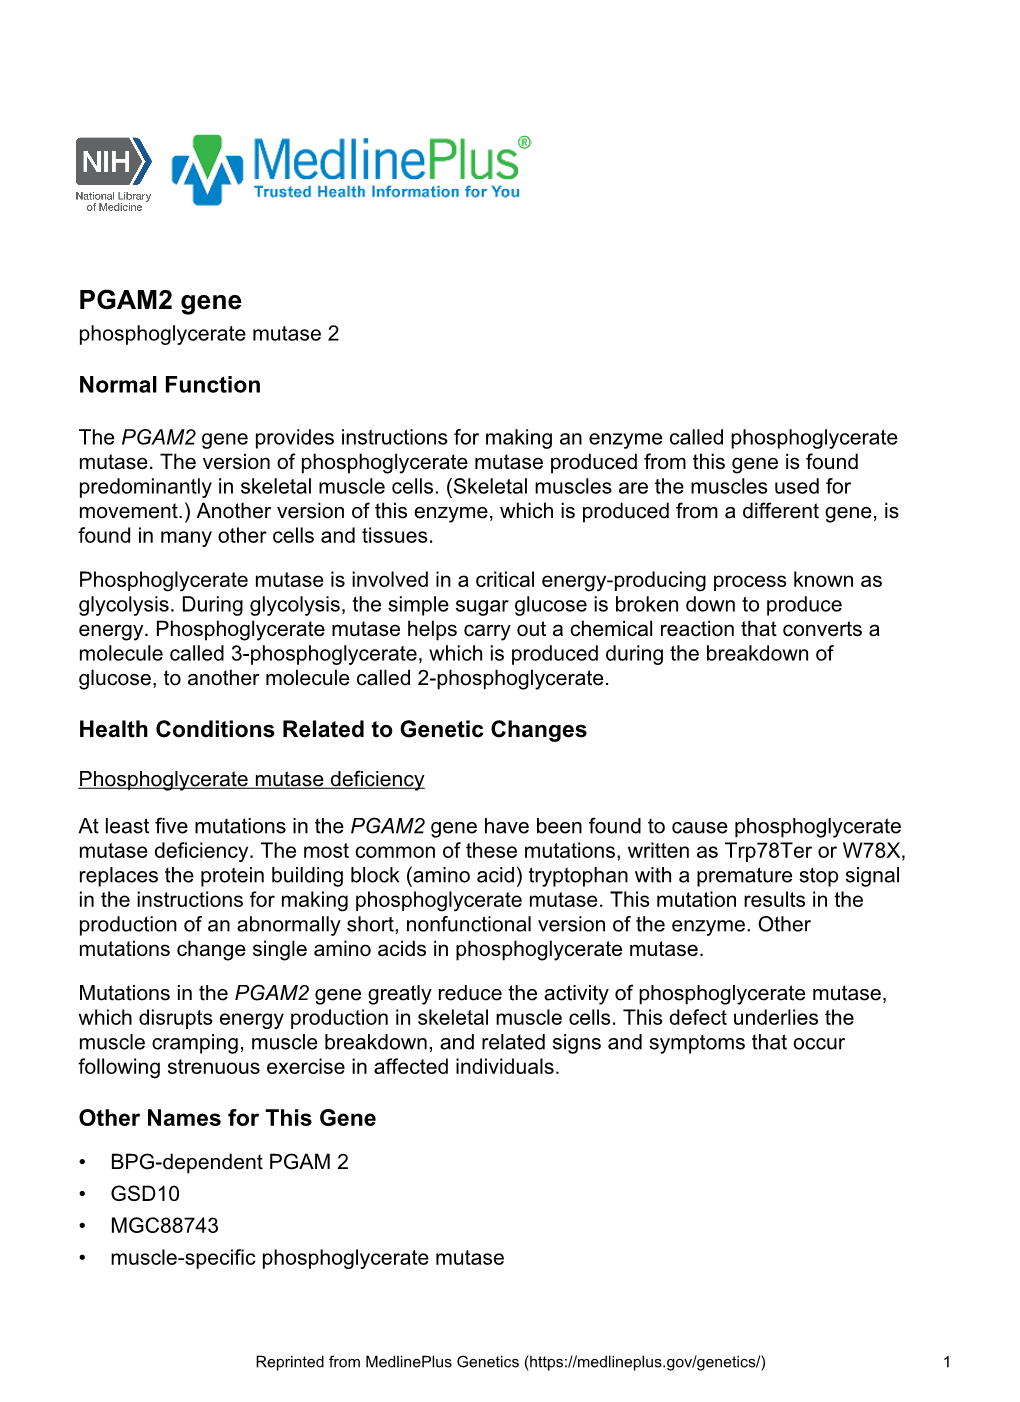 PGAM2 Gene Phosphoglycerate Mutase 2